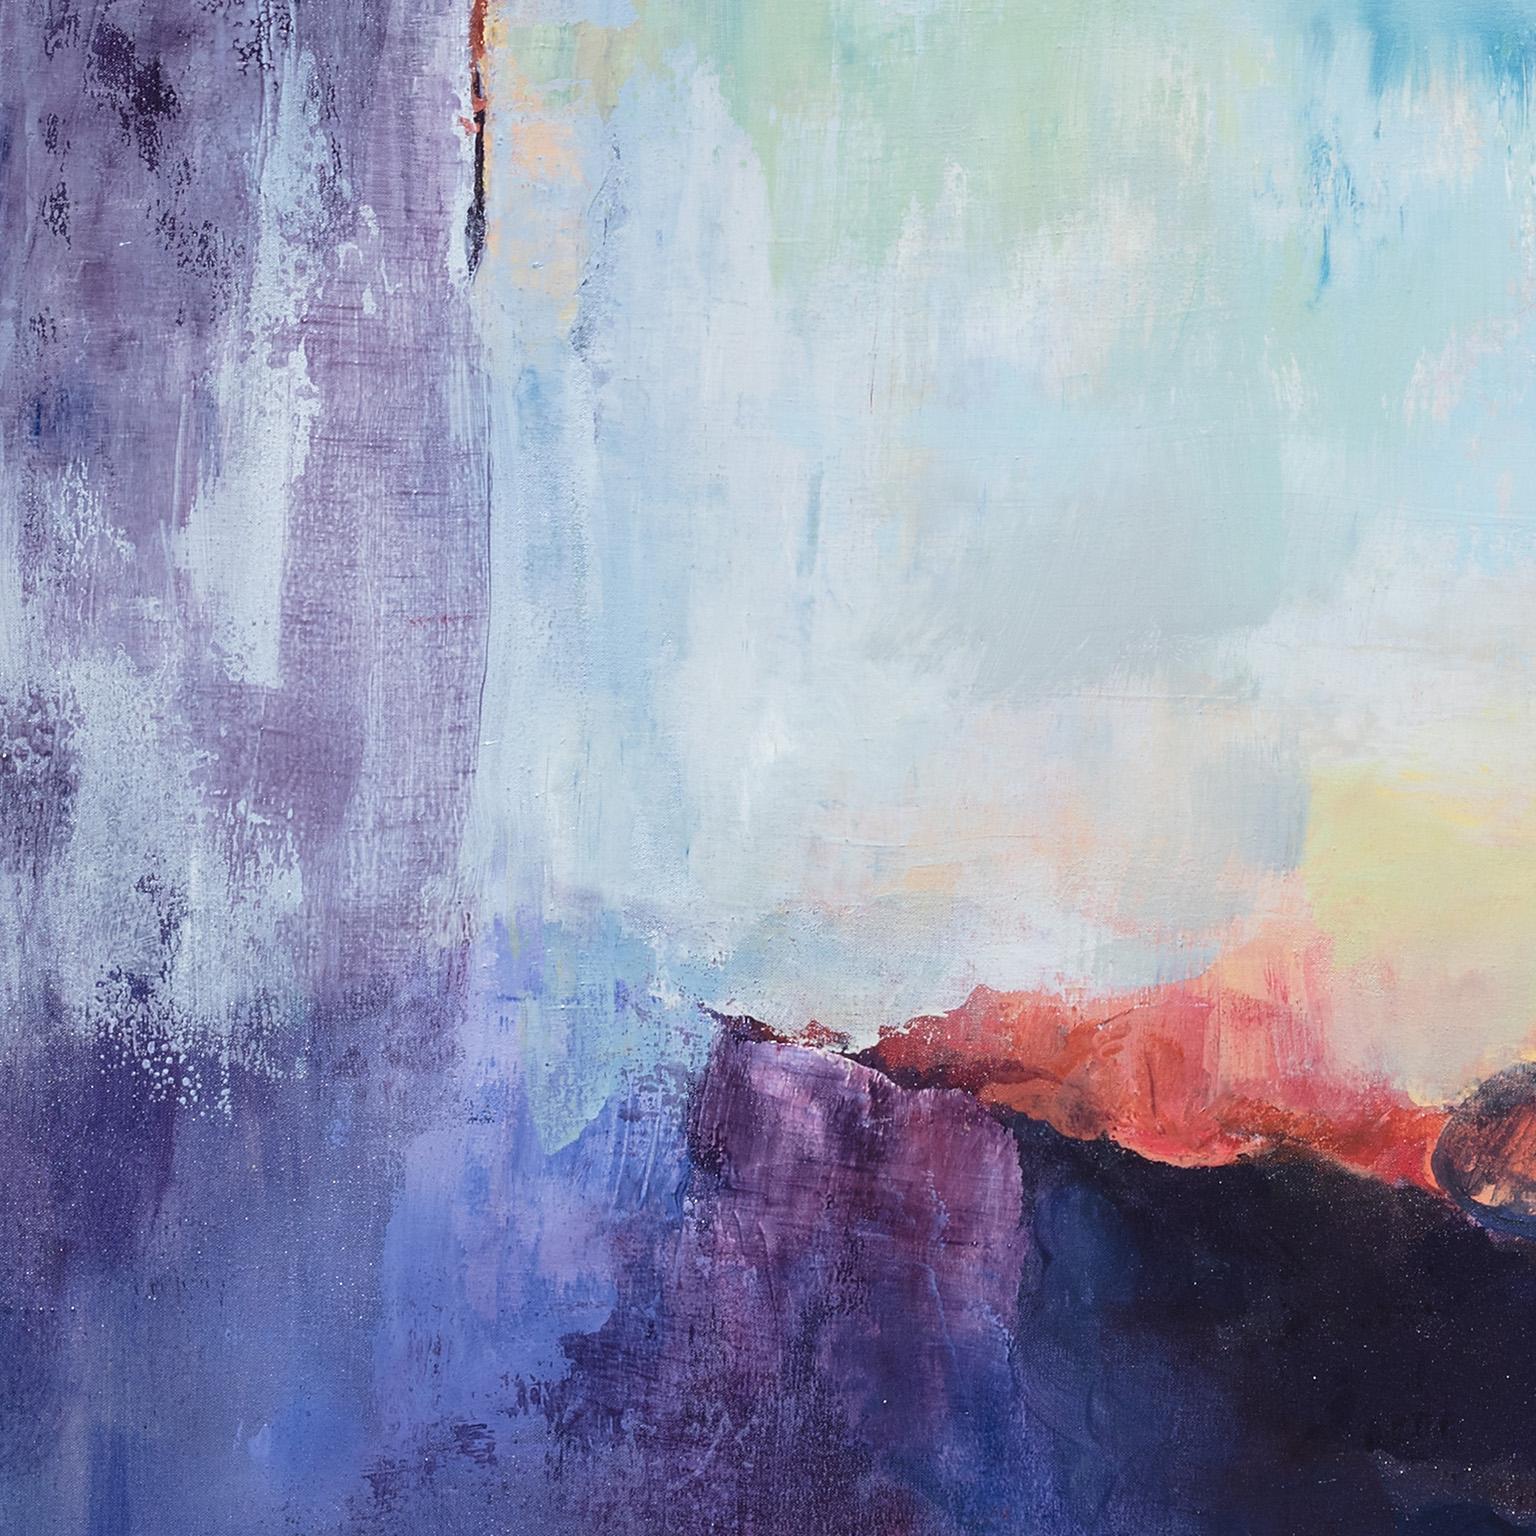 Heart of the Sunrise - Großes abstraktes Landschaftsgemälde in Blau (Abstrakt), Painting, von Andrei Petrov